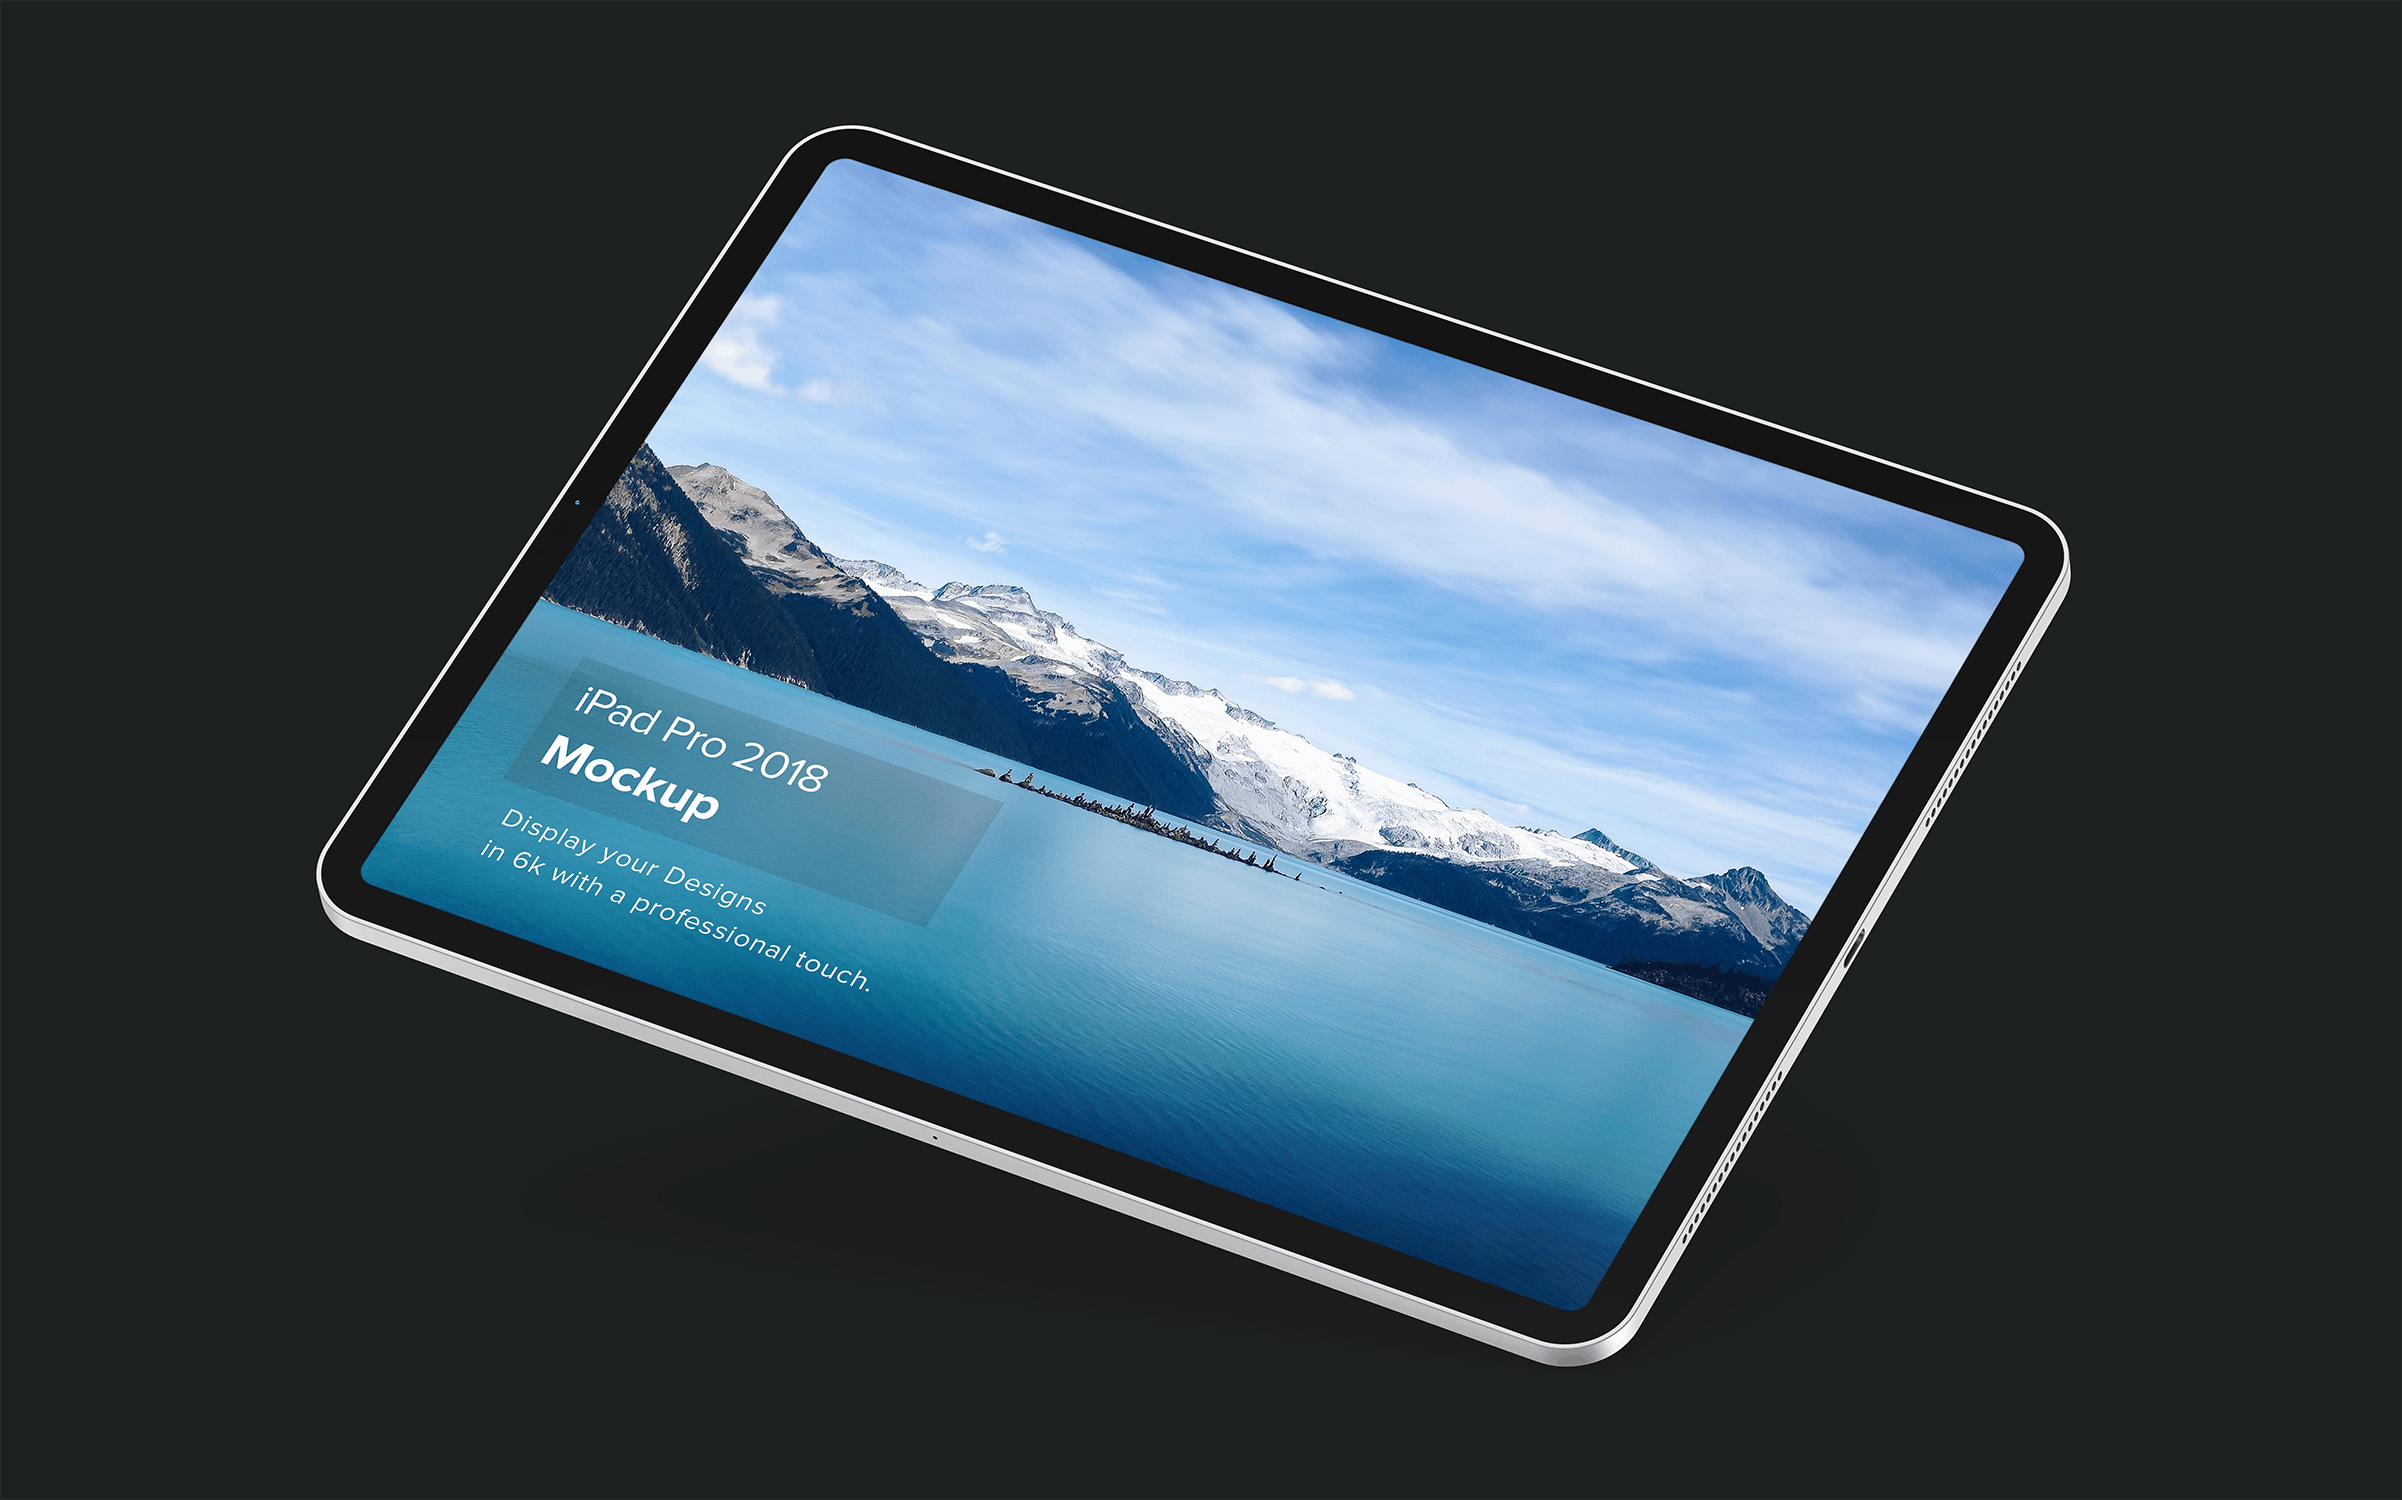 iPad Pro专业平板电脑设计演示第一素材精选样机模板套装v2 iPad Mockup 2.0插图(6)